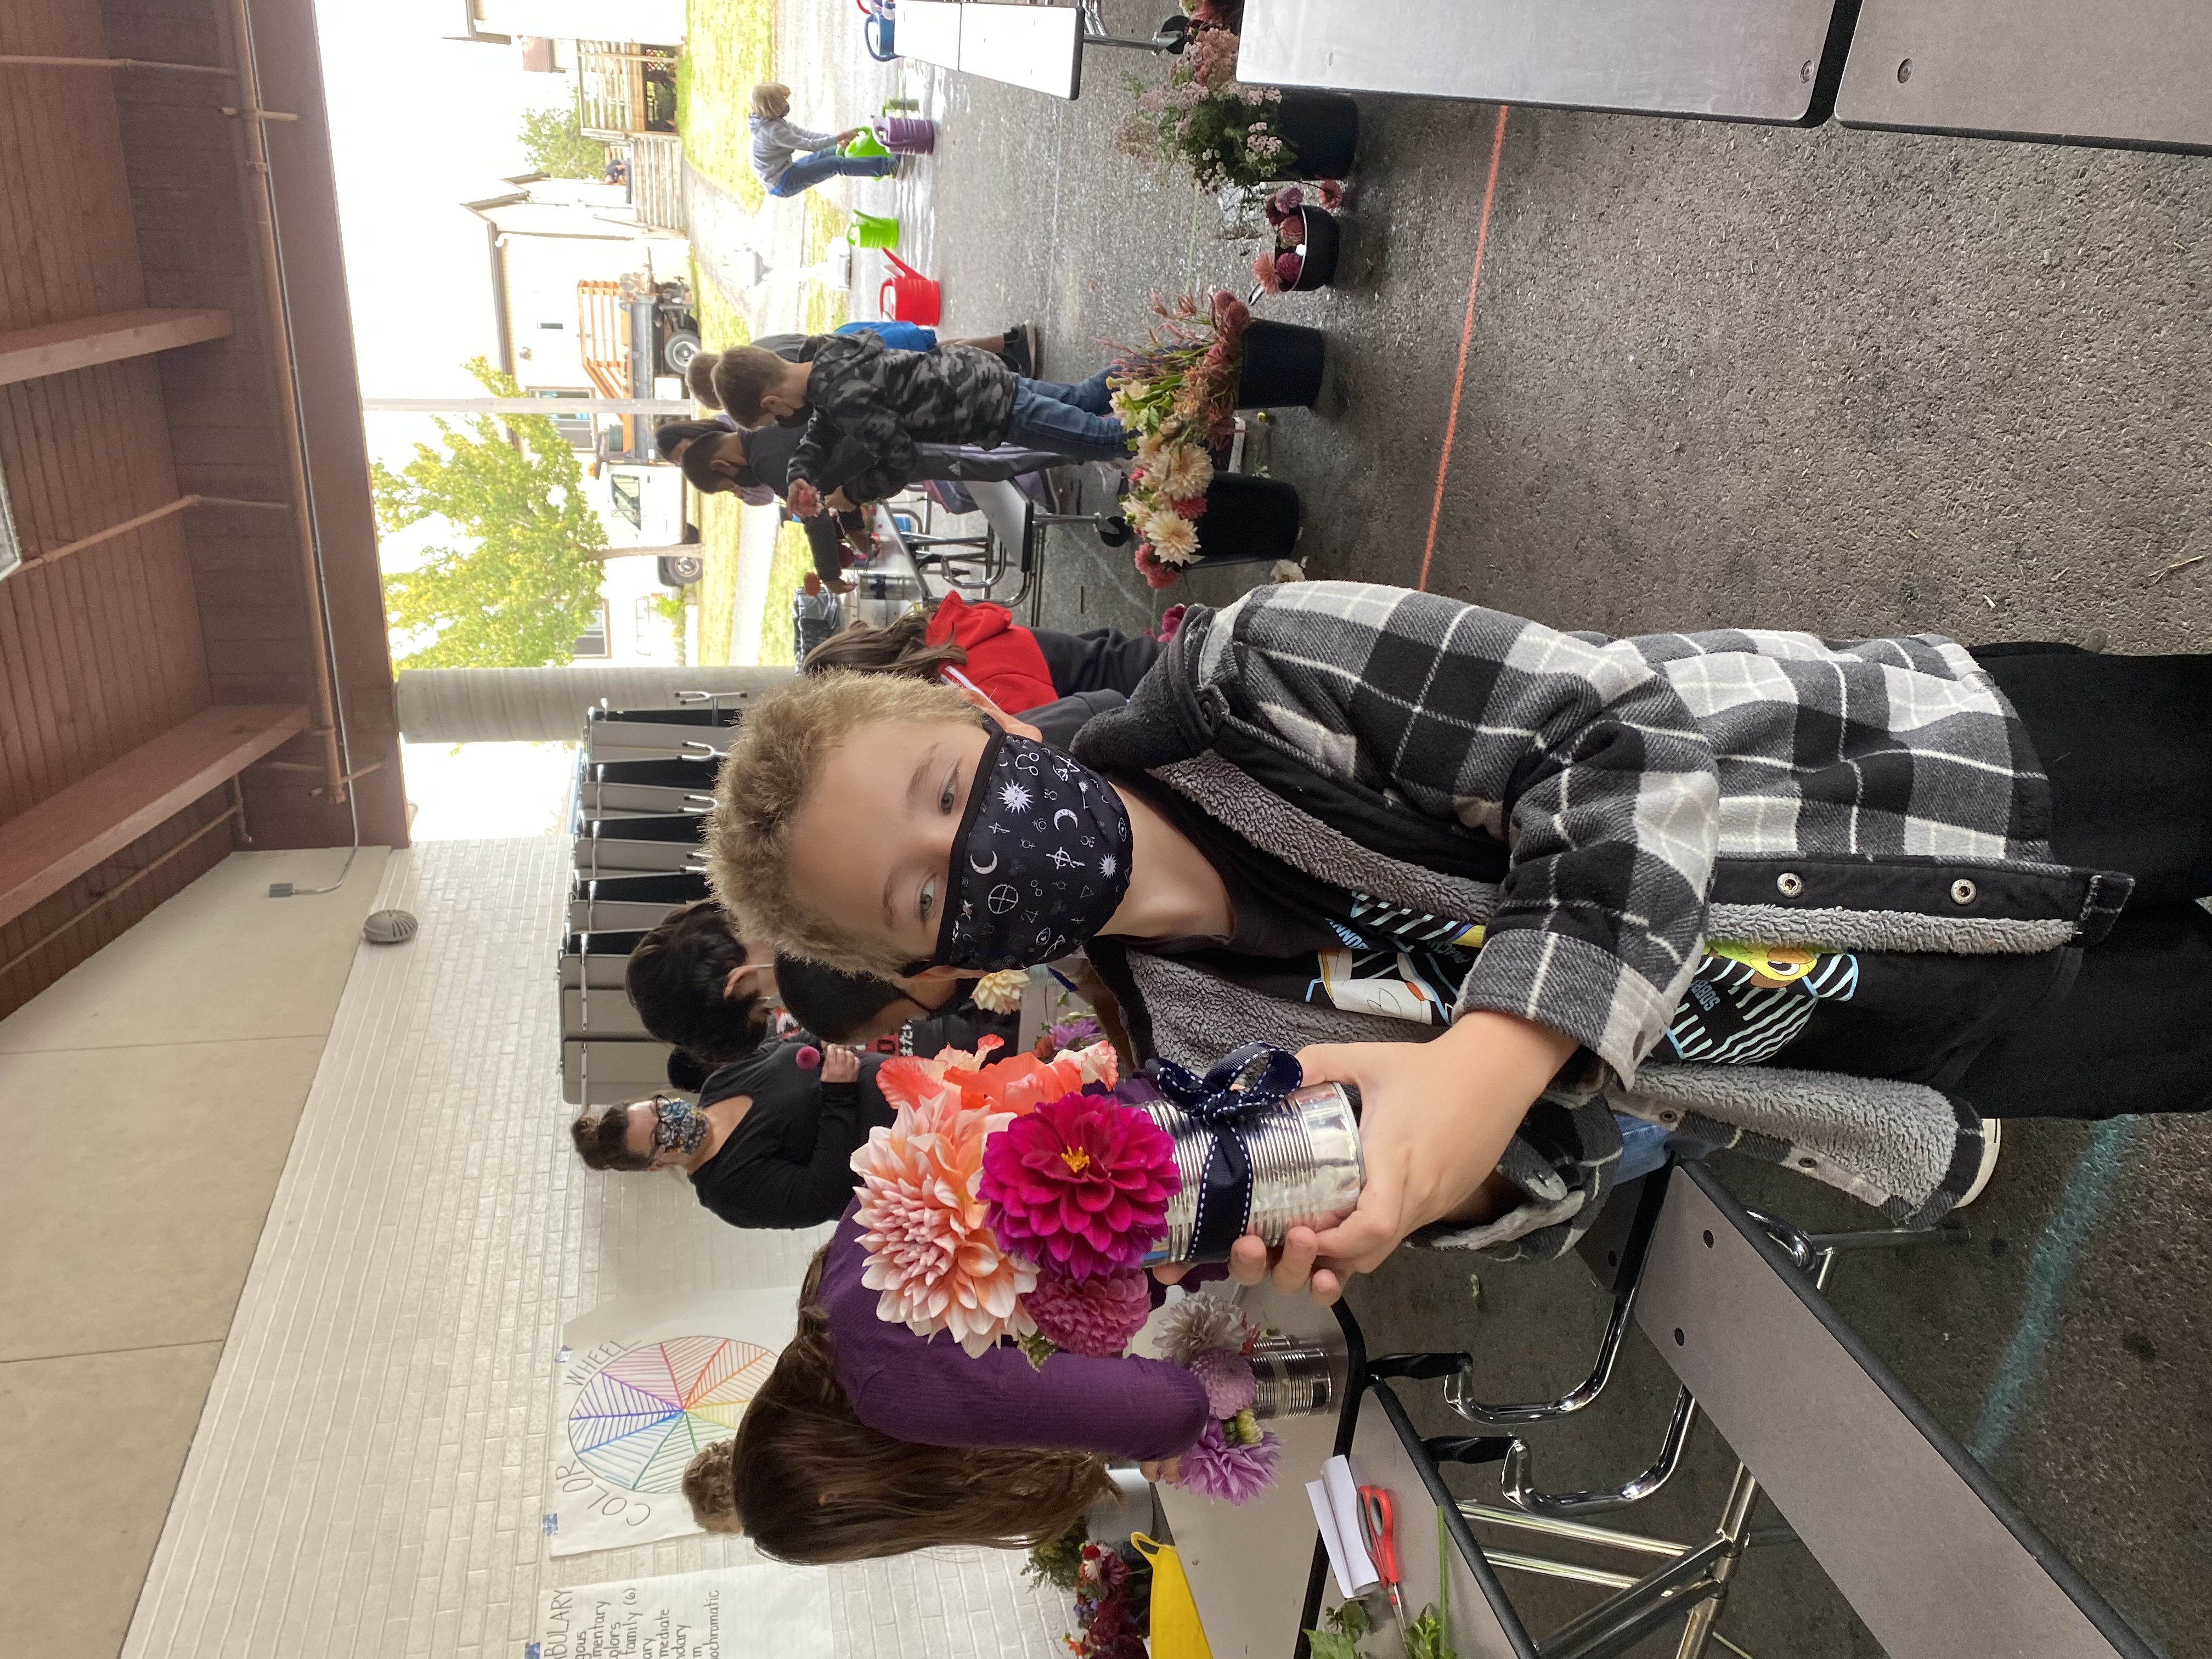 Student showing off his flower arrangement.